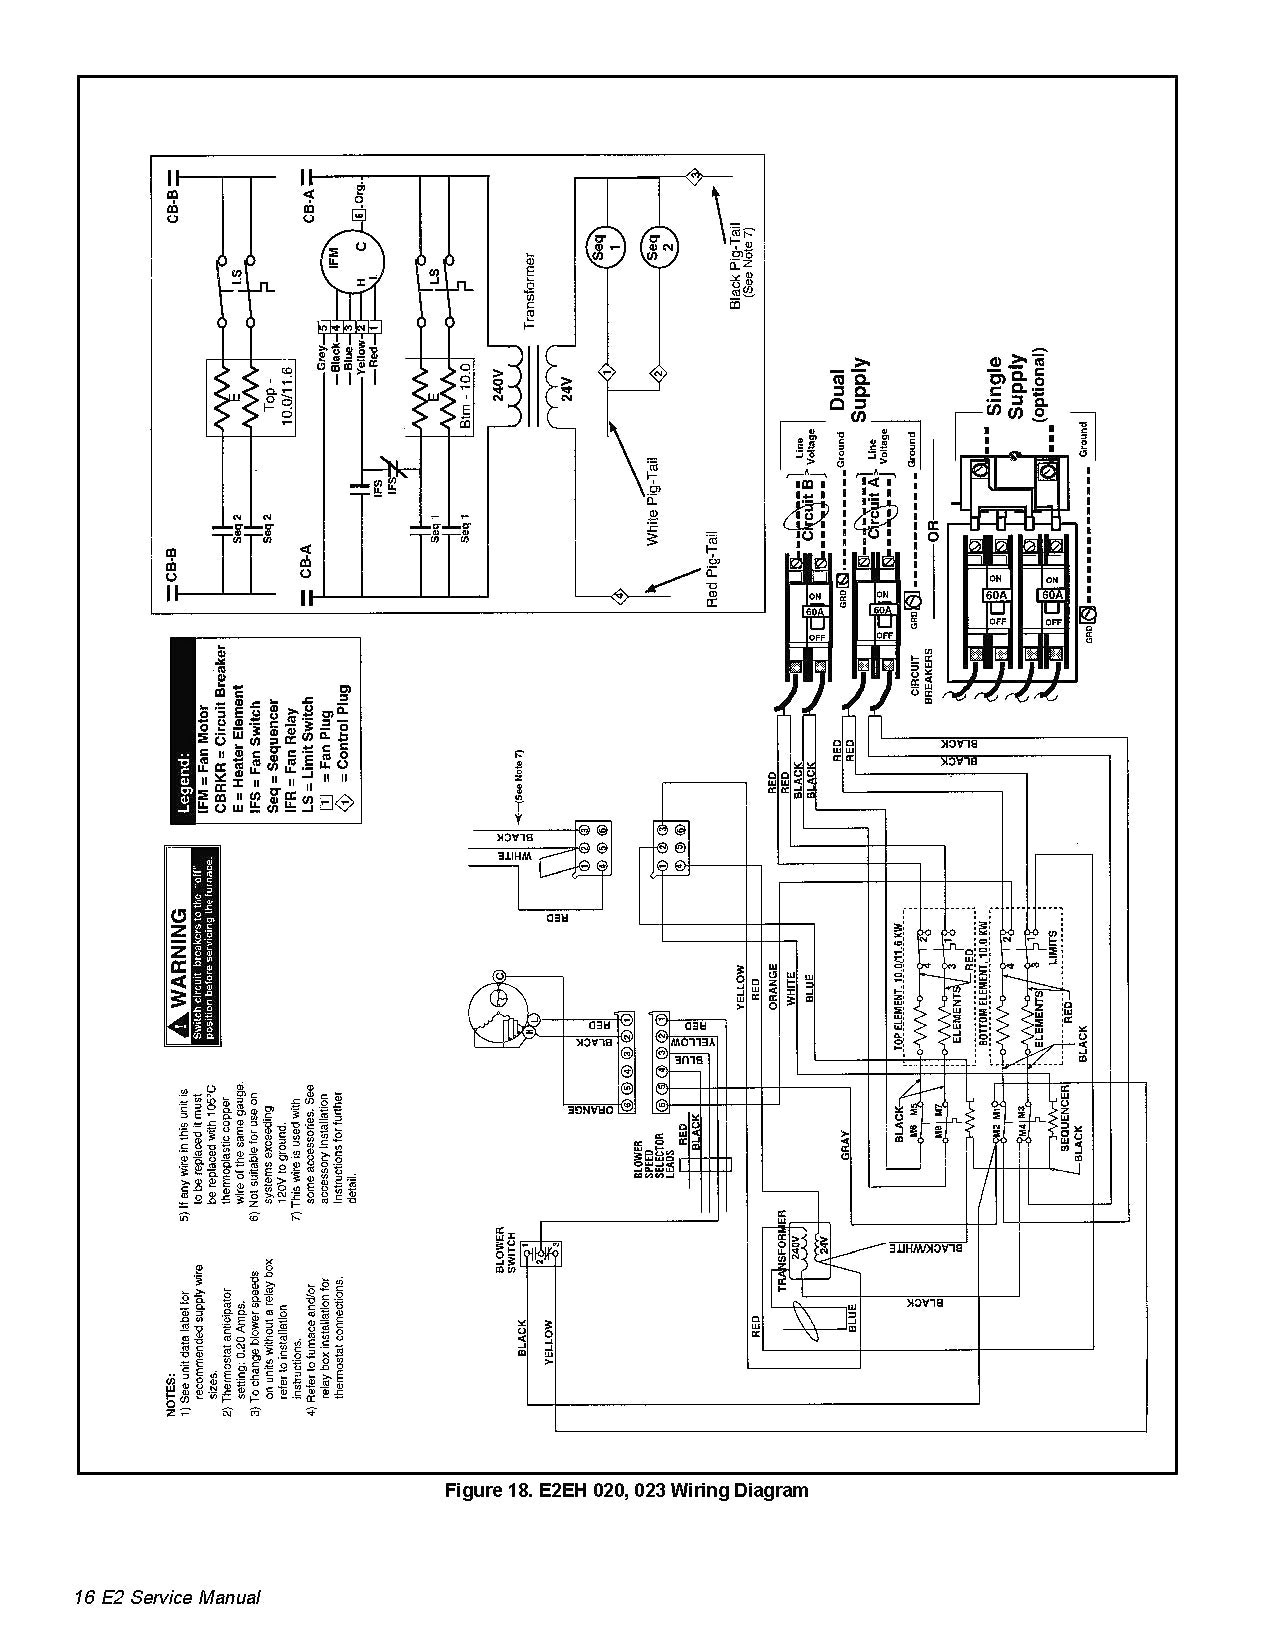 Heat Sequencer Wiring Diagram Electric Heat Furnace Wiring Diagram Refrence nordyne Heat Pump Of Heat Sequencer Wiring Diagram